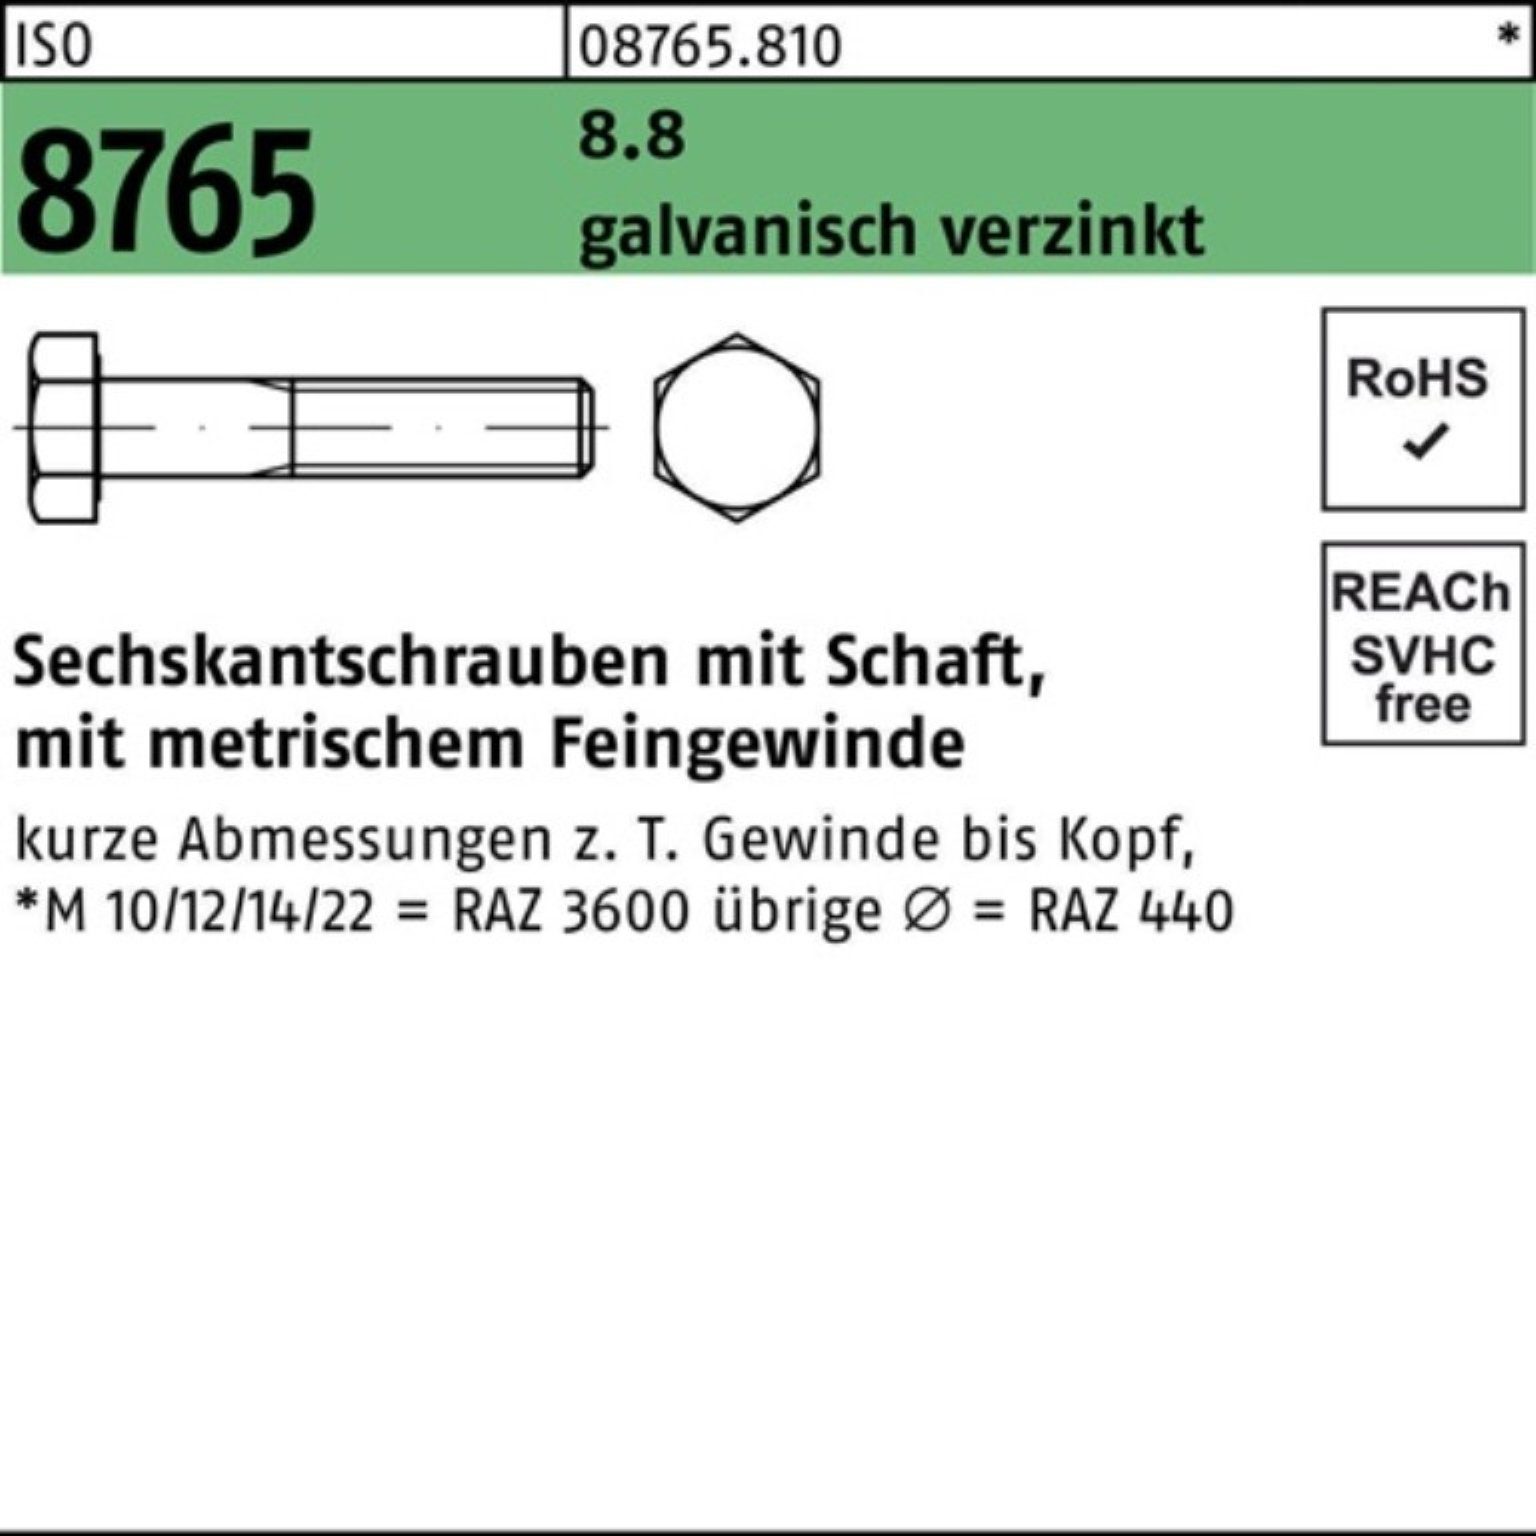 Schaft Reyher Sechskantschraube 8.8 Pack 8765 100er ISO galv.verz. Sechskantschraube M24x2x120